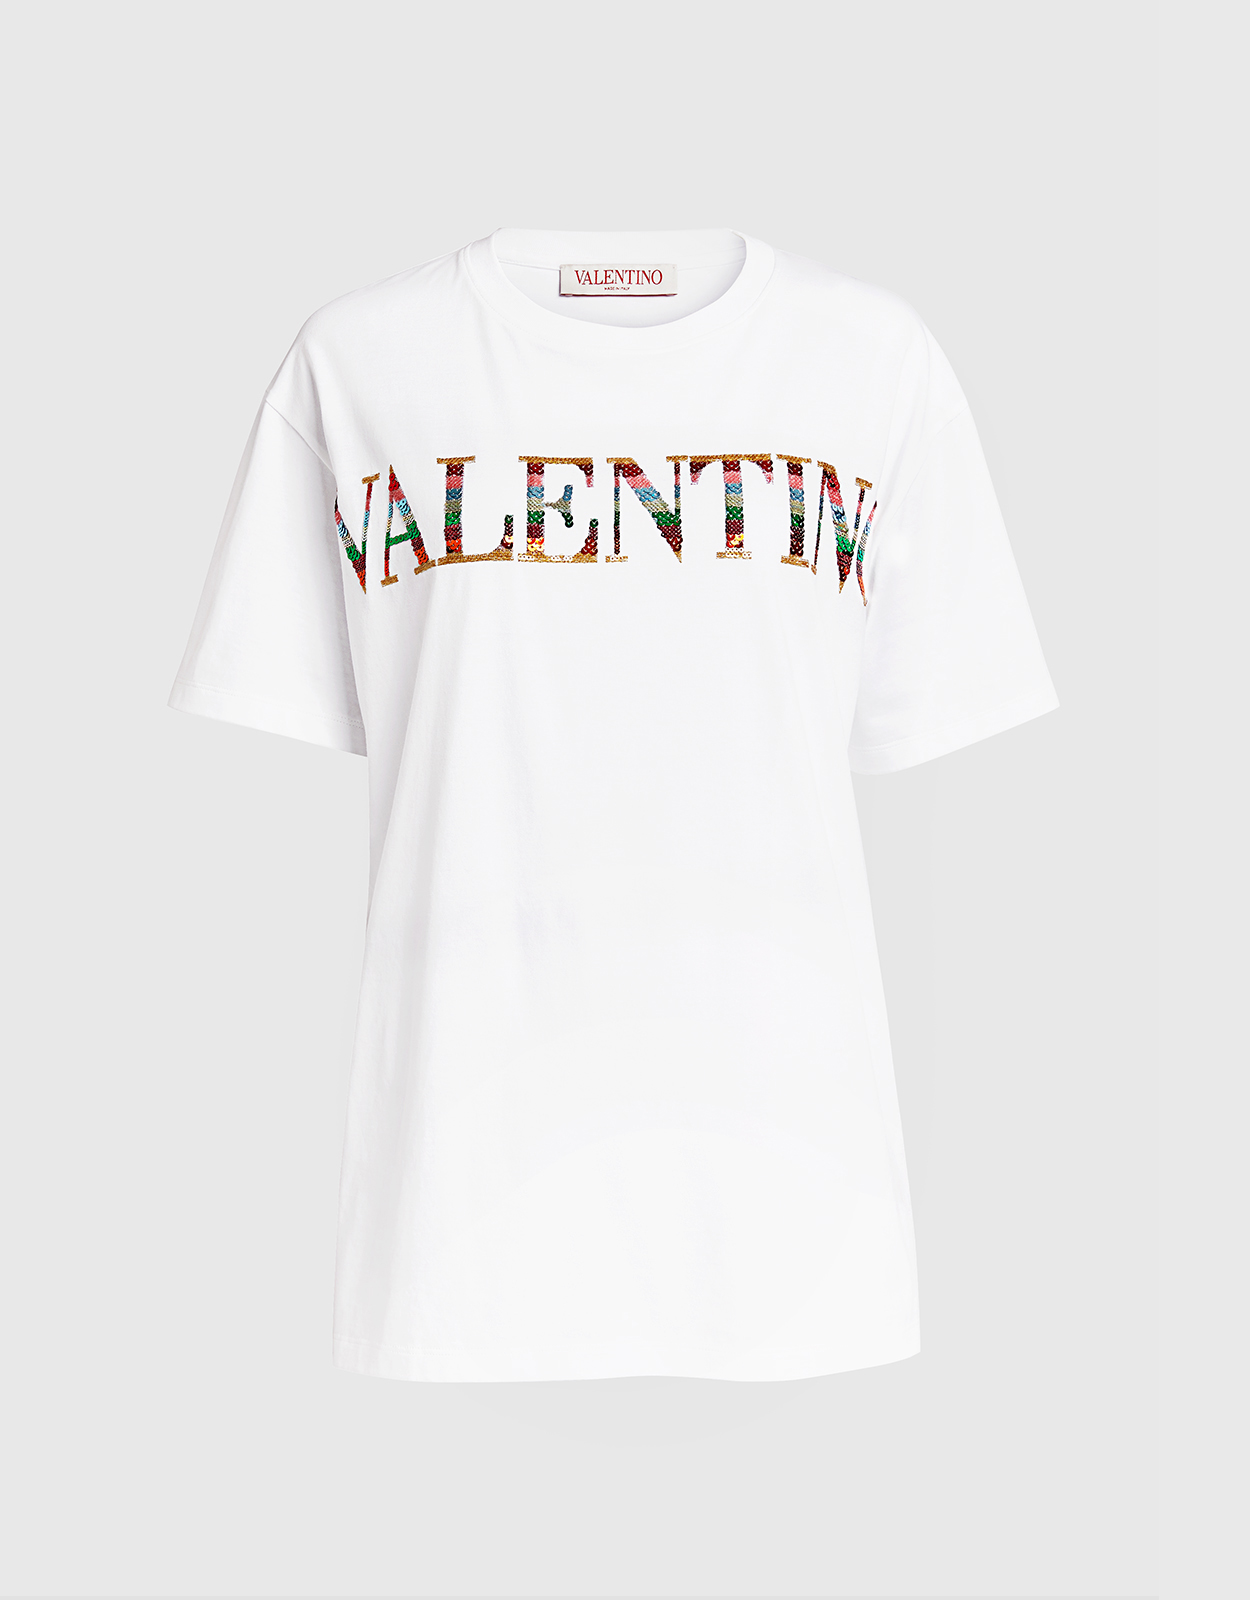 Trafik Bermad Børns dag Valentino Sequined Logo Rainbow Jersey T-shirt (Tops,T-shirts) IFCHIC.COM